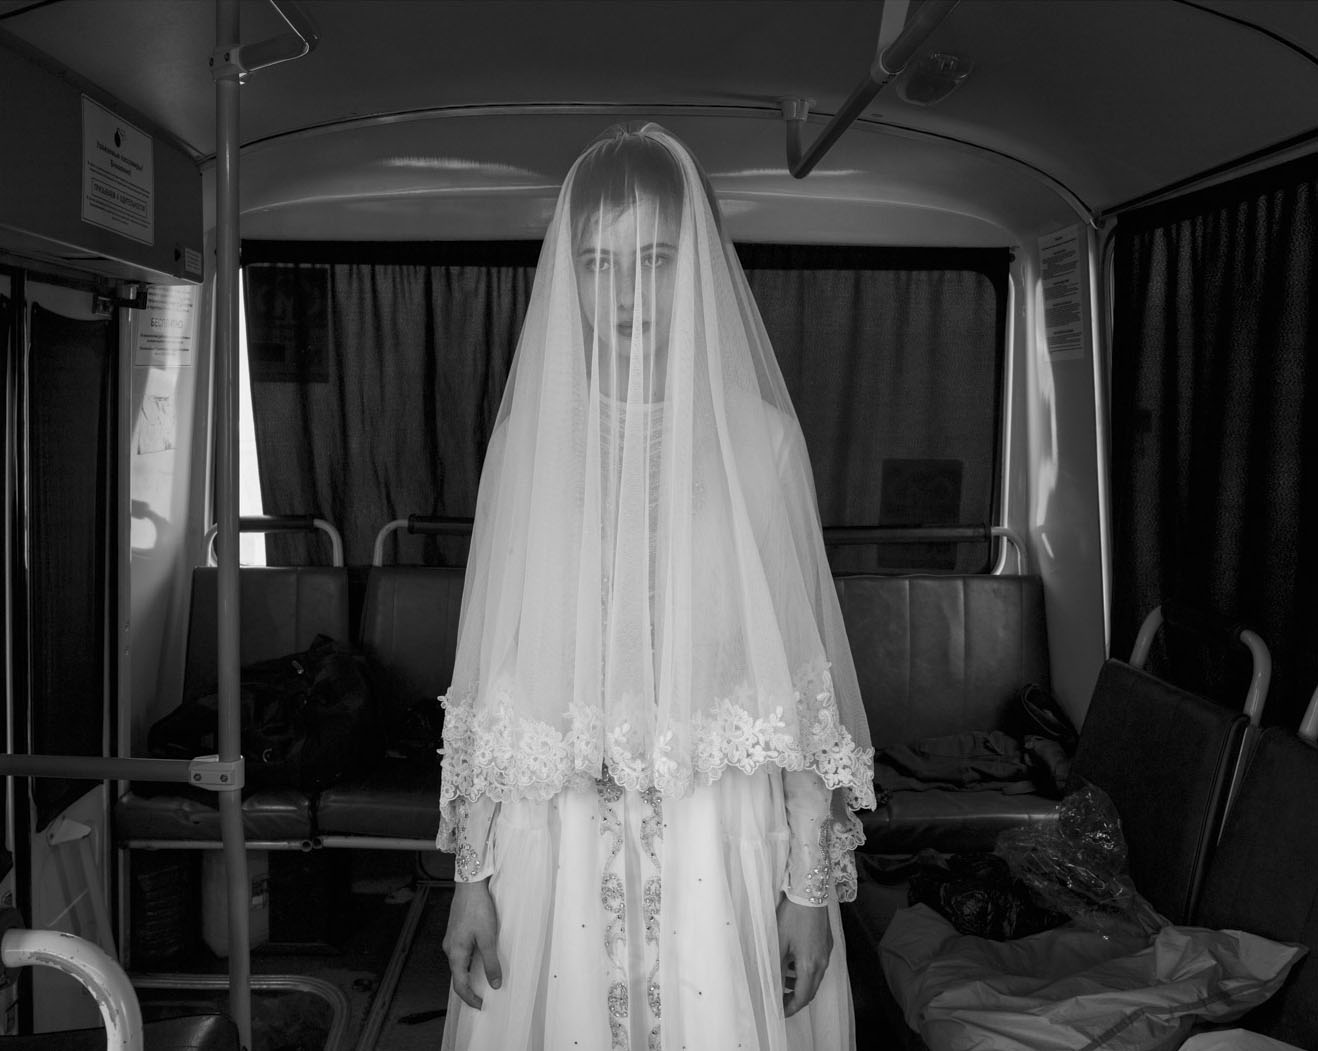 Rada, 14, tries on a wedding dress. Chechnya. 2013.